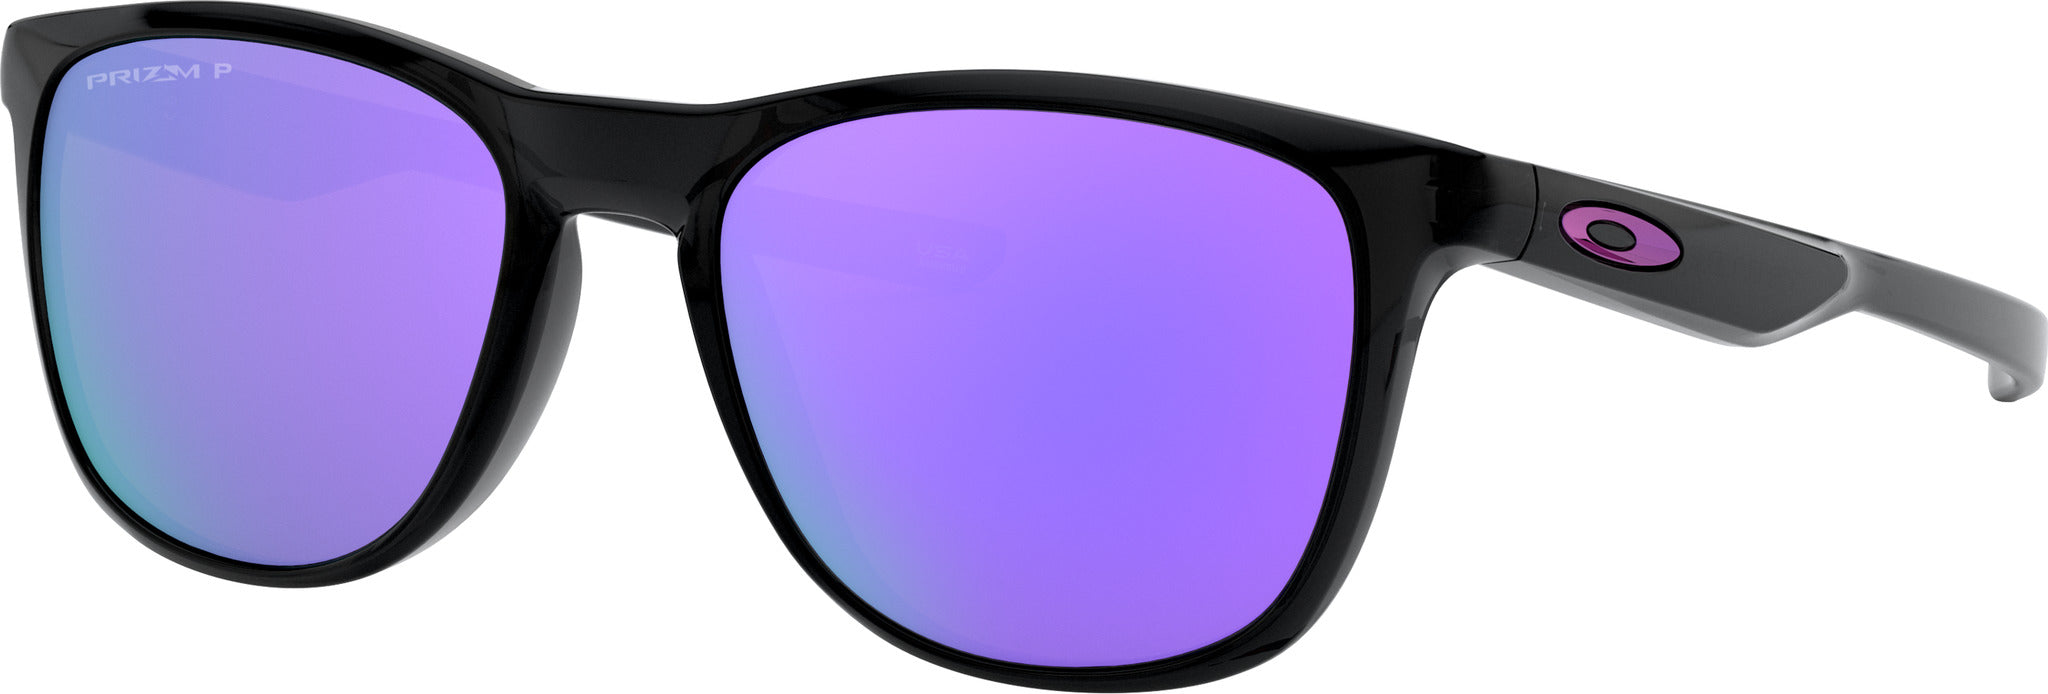 oakley violet iridium